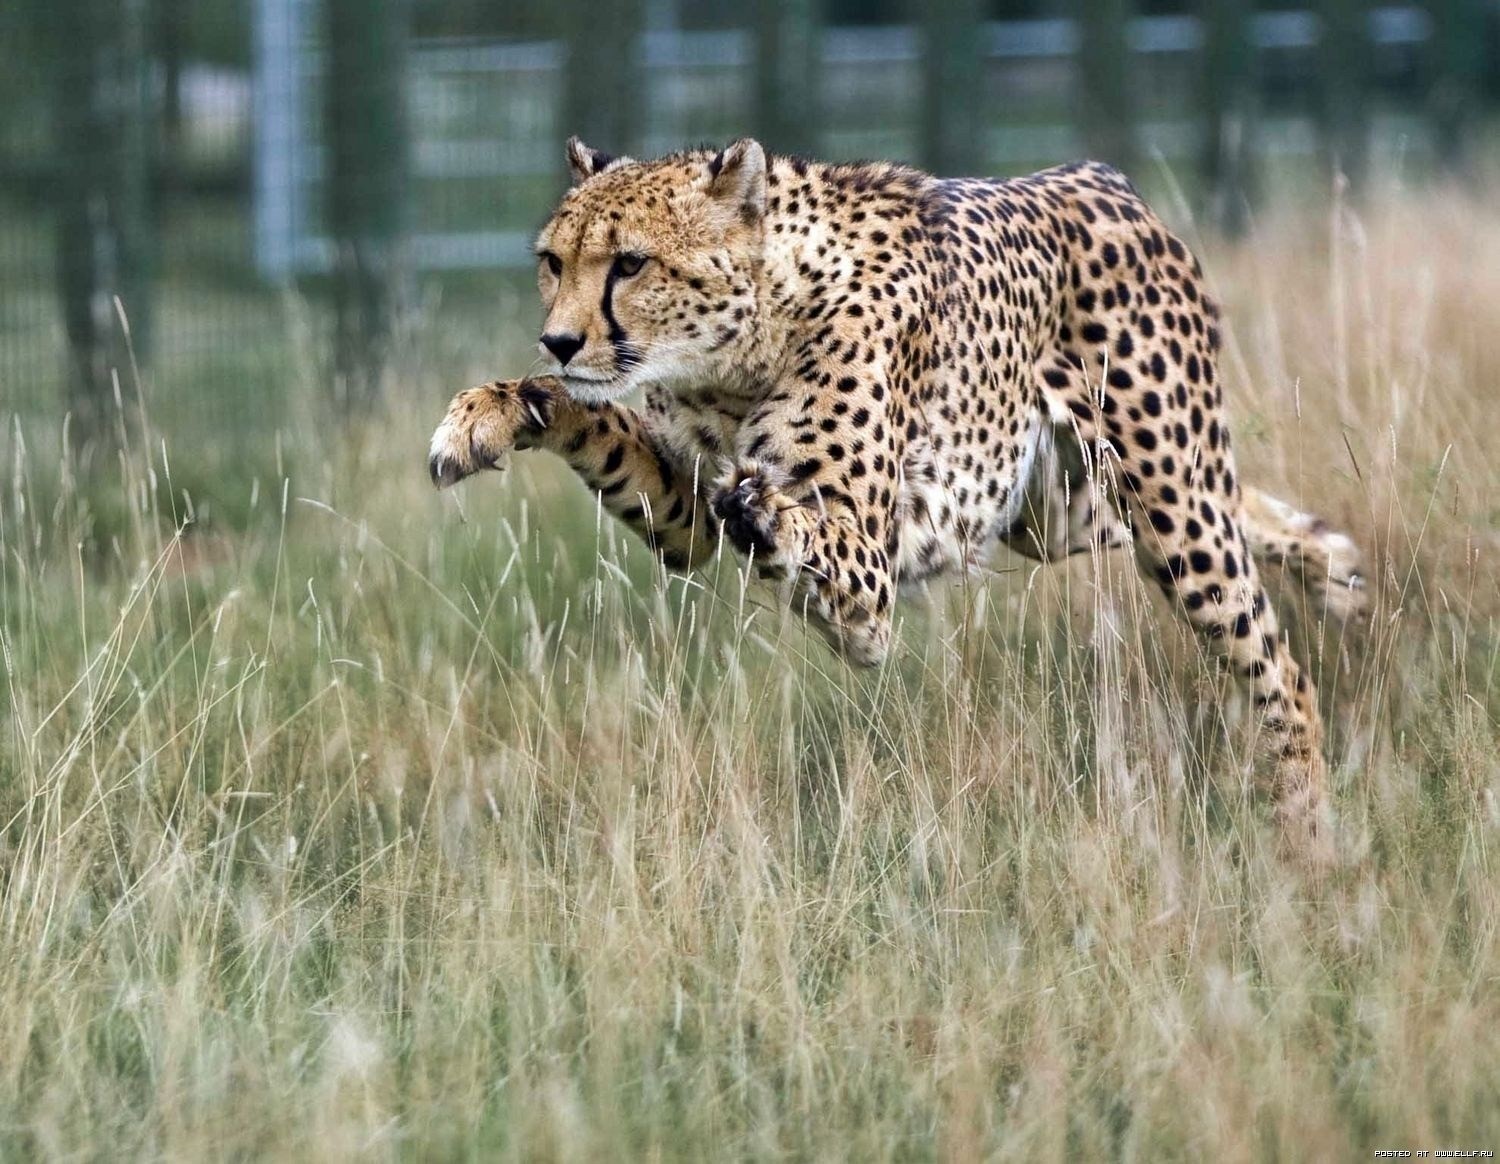 Wildlife of the World Cheetah Wallpapers Desktop 2012